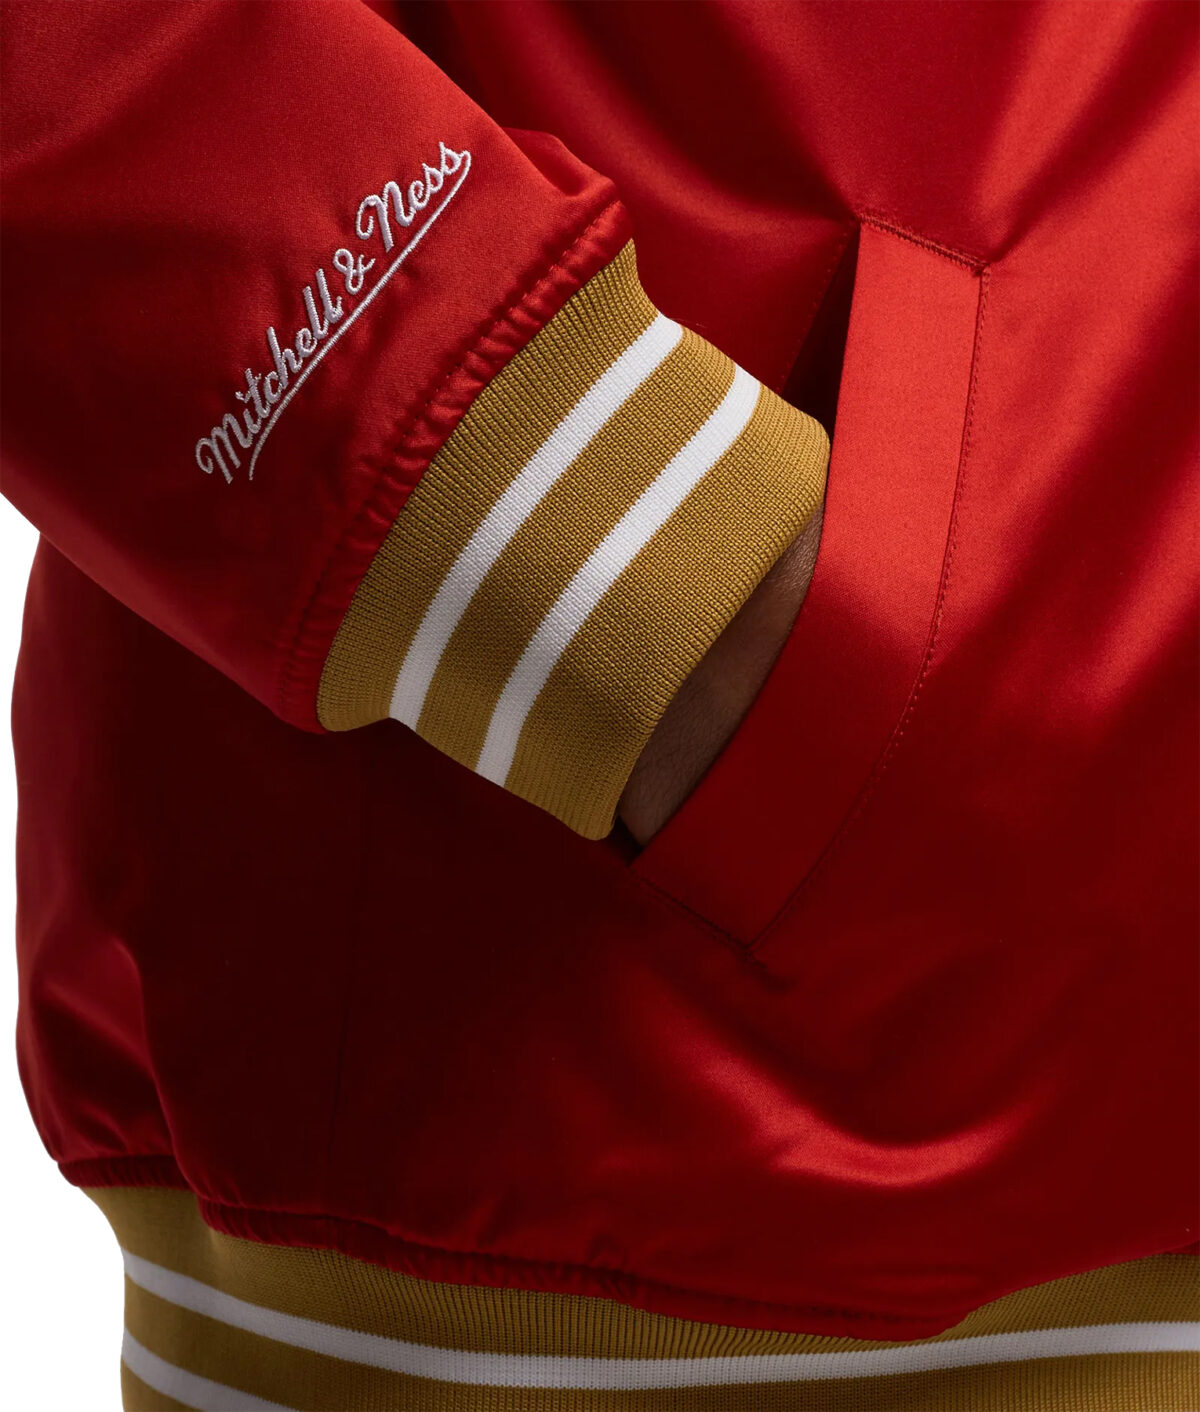 San Francisco 49ers Mitchell & Ness Jacket